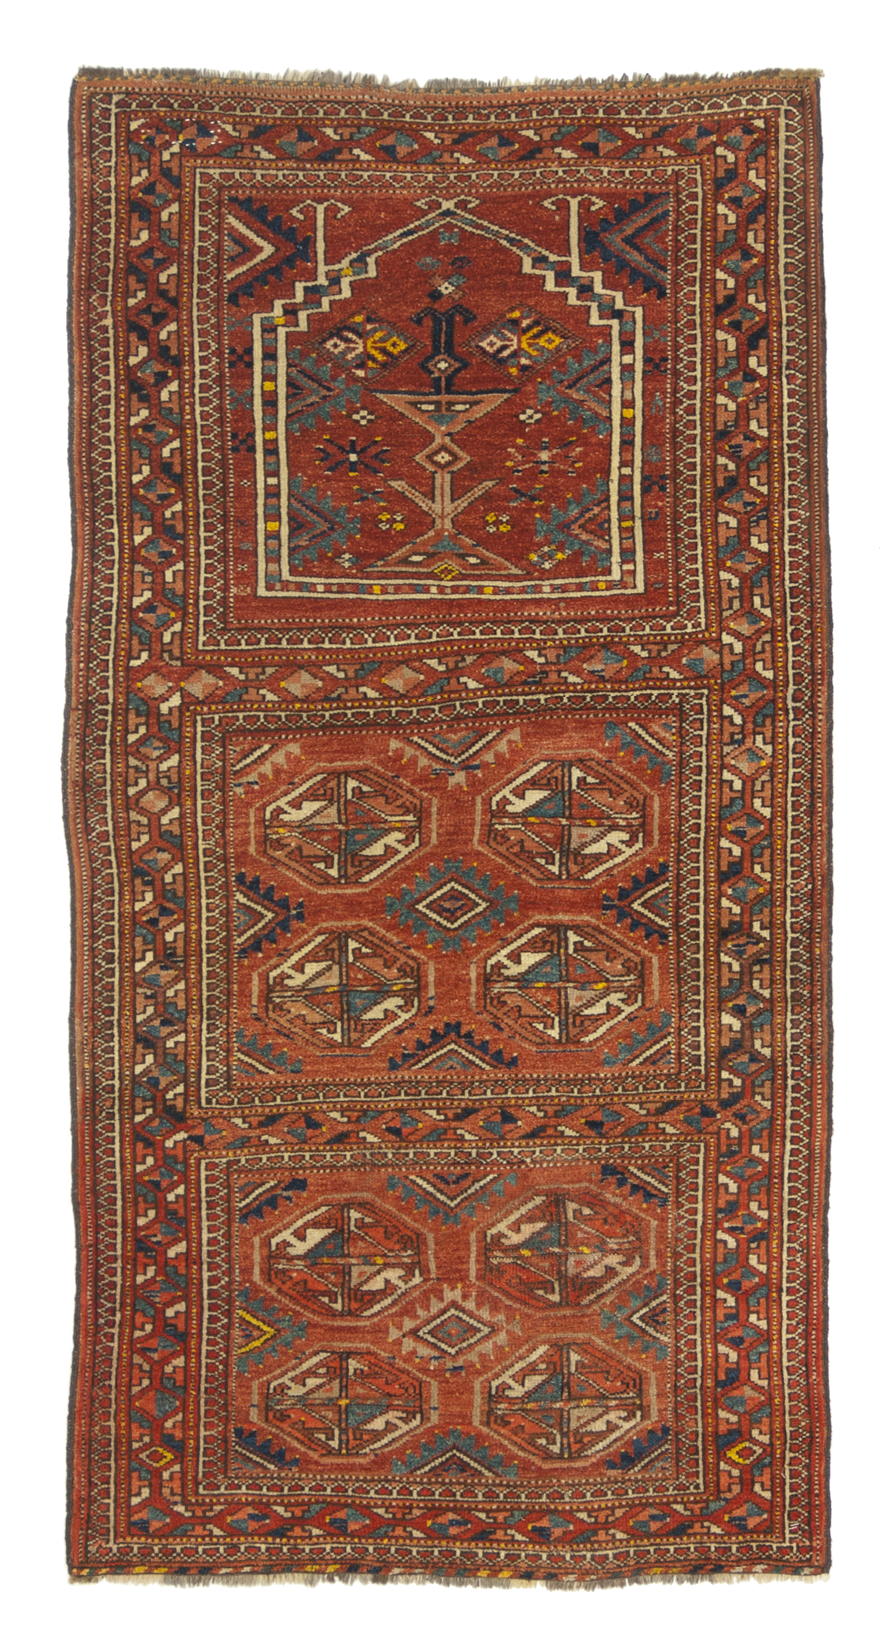 beshir tappeto turcomanno